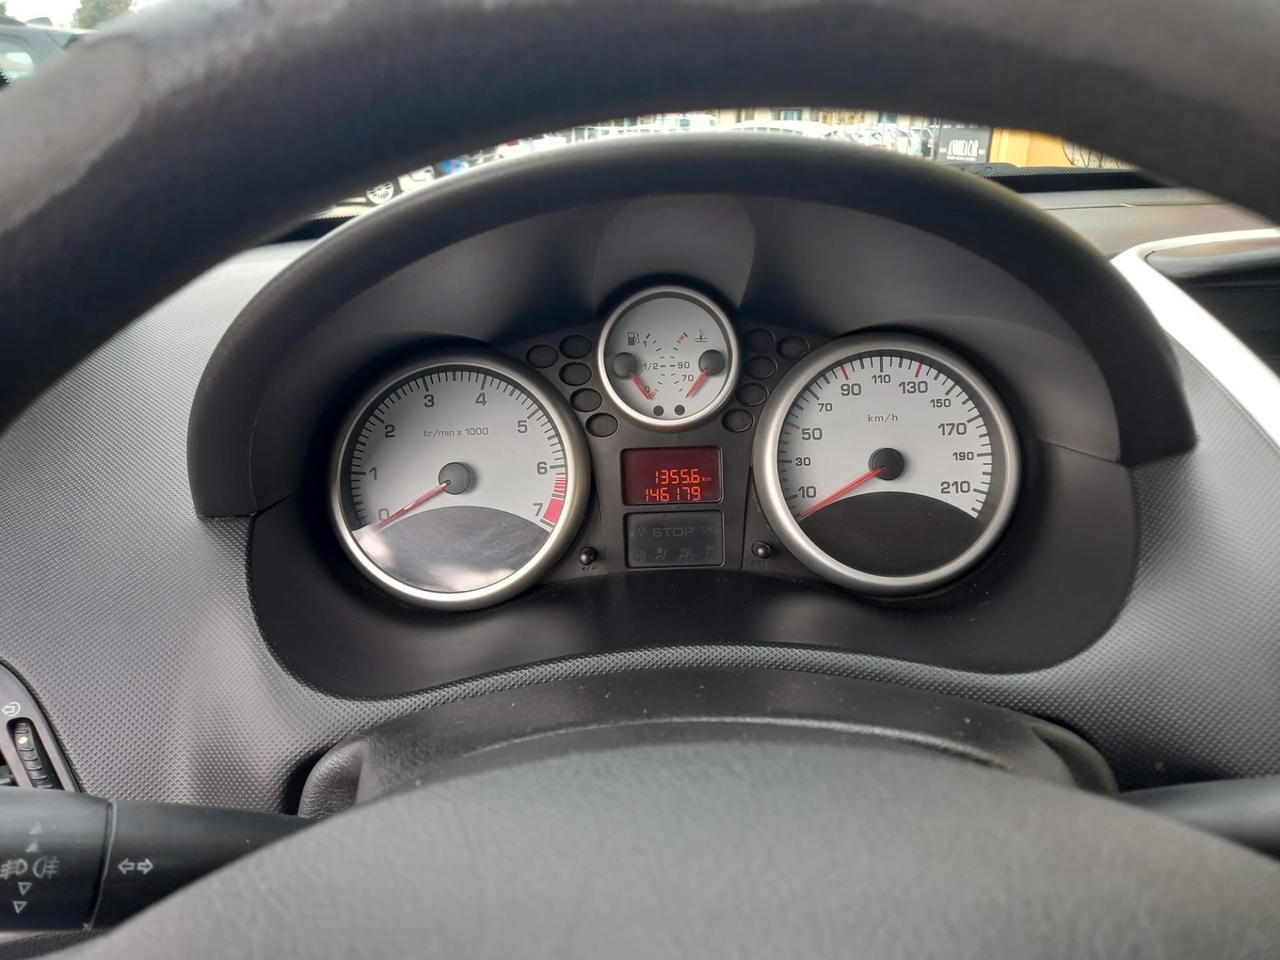 Peugeot 206 1.1 benzina